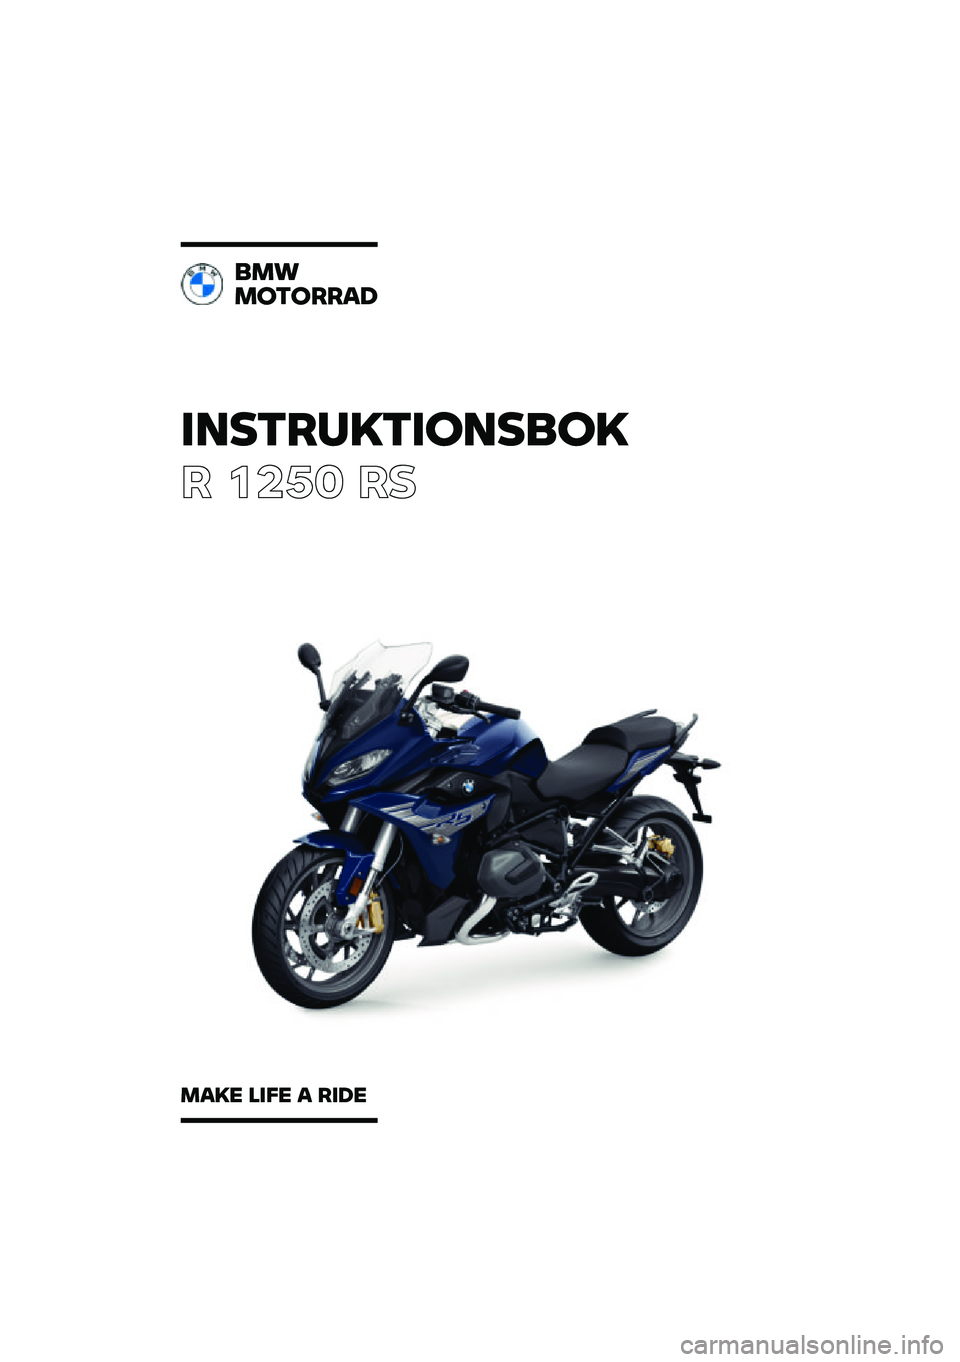 BMW MOTORRAD R 1250 RS 2021  Instruktionsbok (in Swedish) �������\b���	���
�	�\b
� ����	 ��
�
��\f
��	��	���
�
��
�\b� ���� �
 ���� 